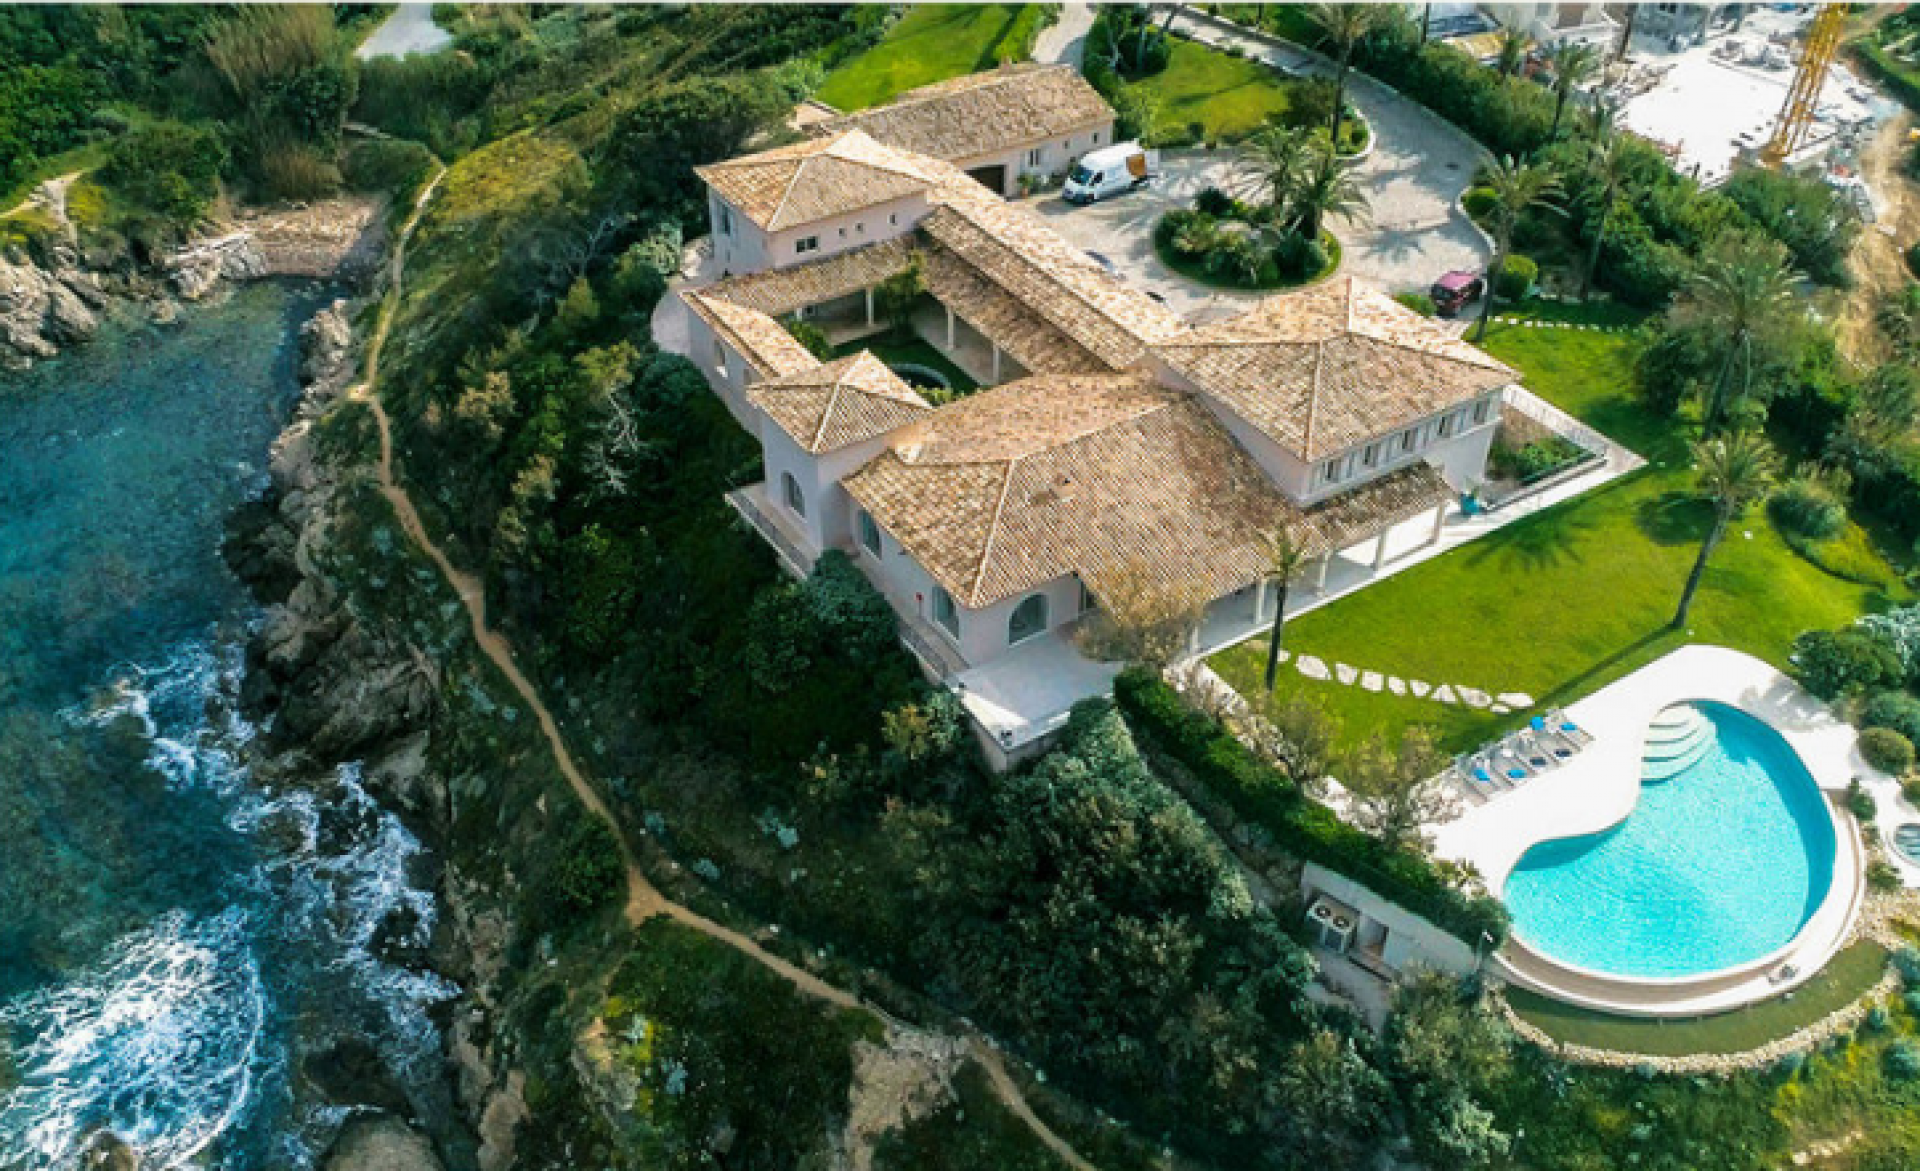 Villa de grand standing en bord de mer à St-Tropez